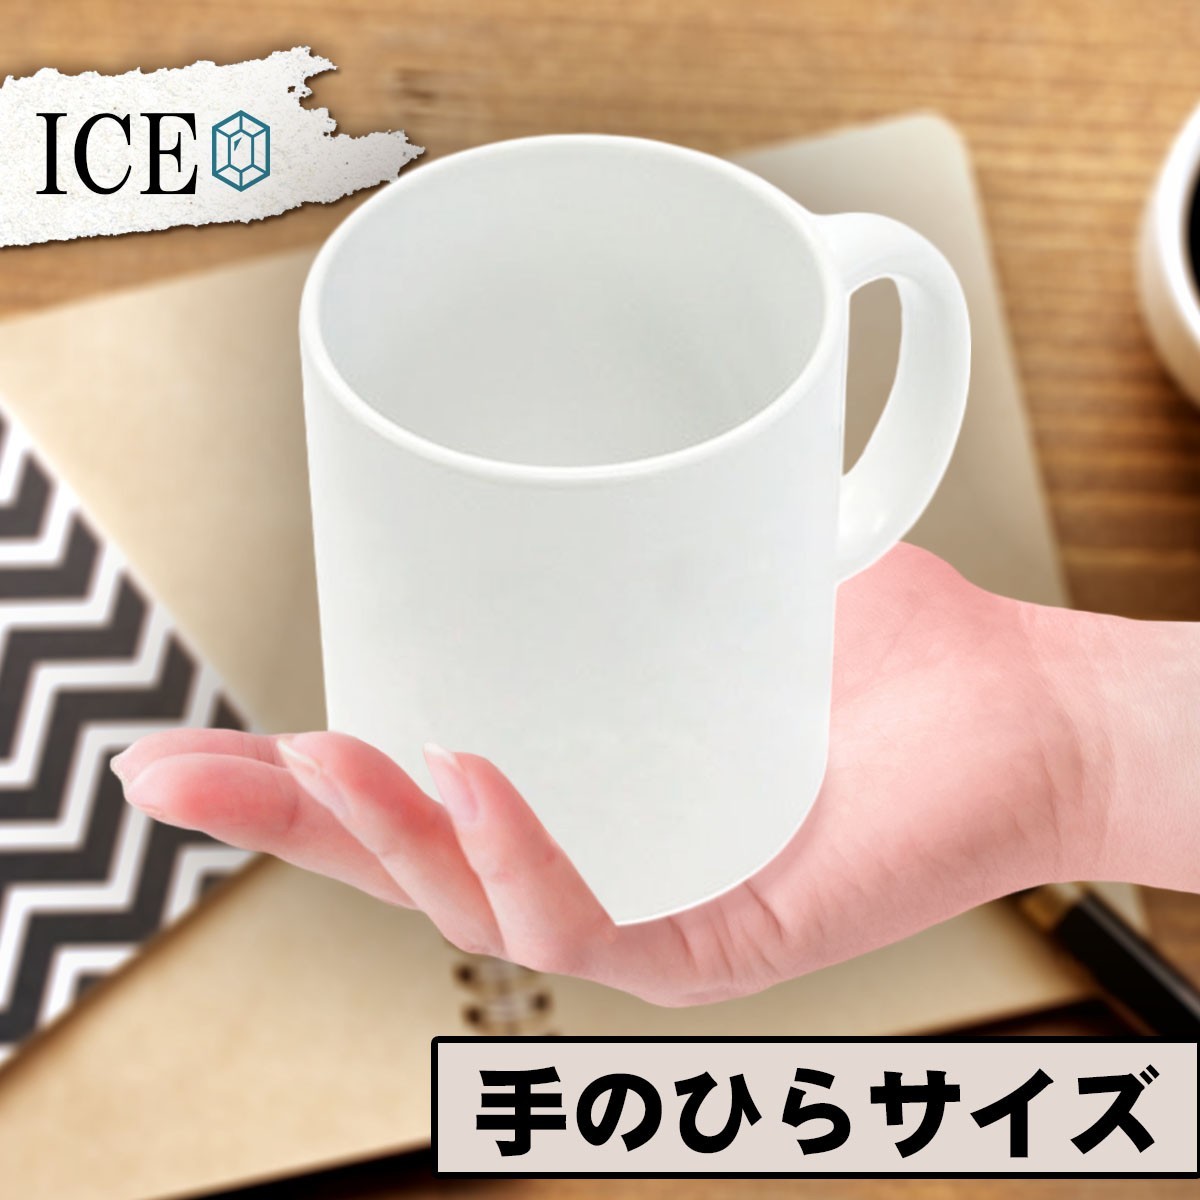 UFO おもしろ マグカップ コップ 陶器 可愛い かわいい 白 シンプル かわいい カッコイイ シュール 面白い ジョーク ゆるい プレゼント プ_画像2